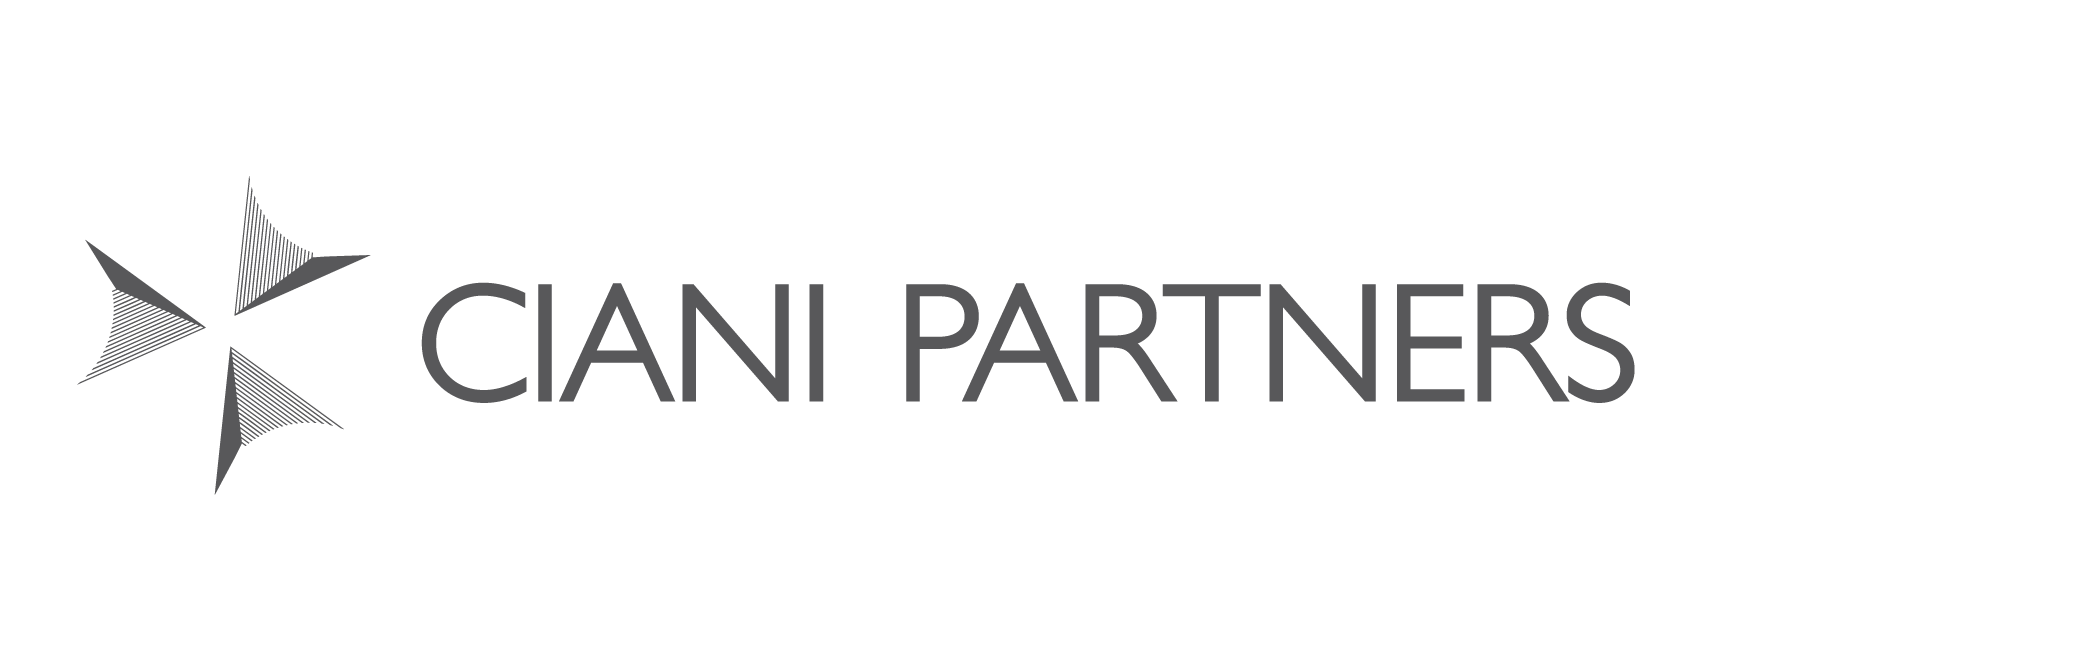 Ciani Partners